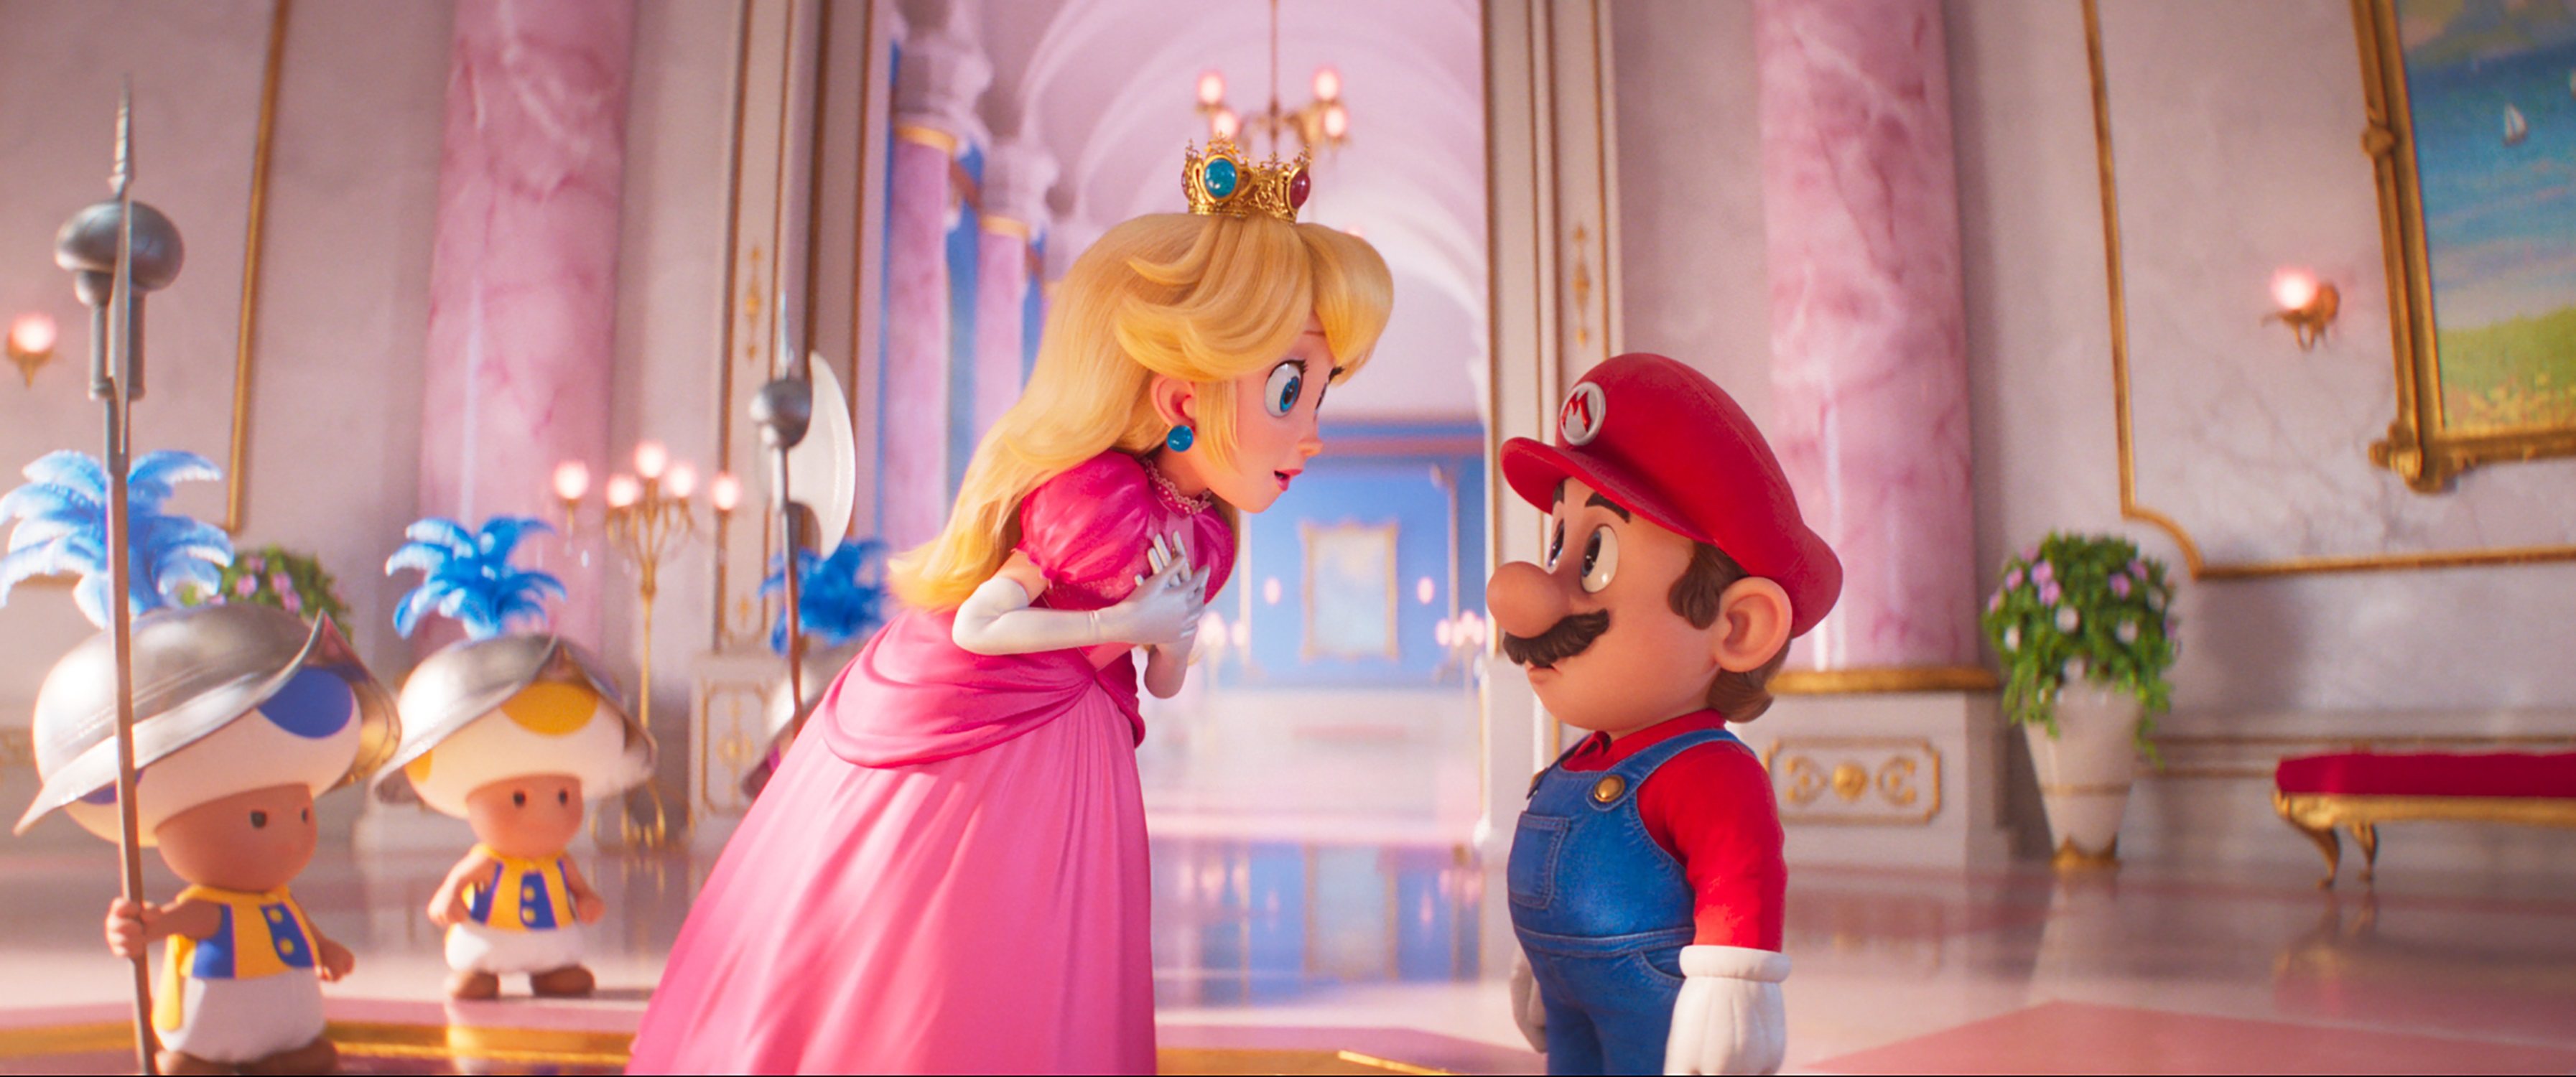 Princess Peach (voiced by Anya Taylor-Joy) and Mario (Chris Pratt) in a still from The Super Mario Bros. Movie.